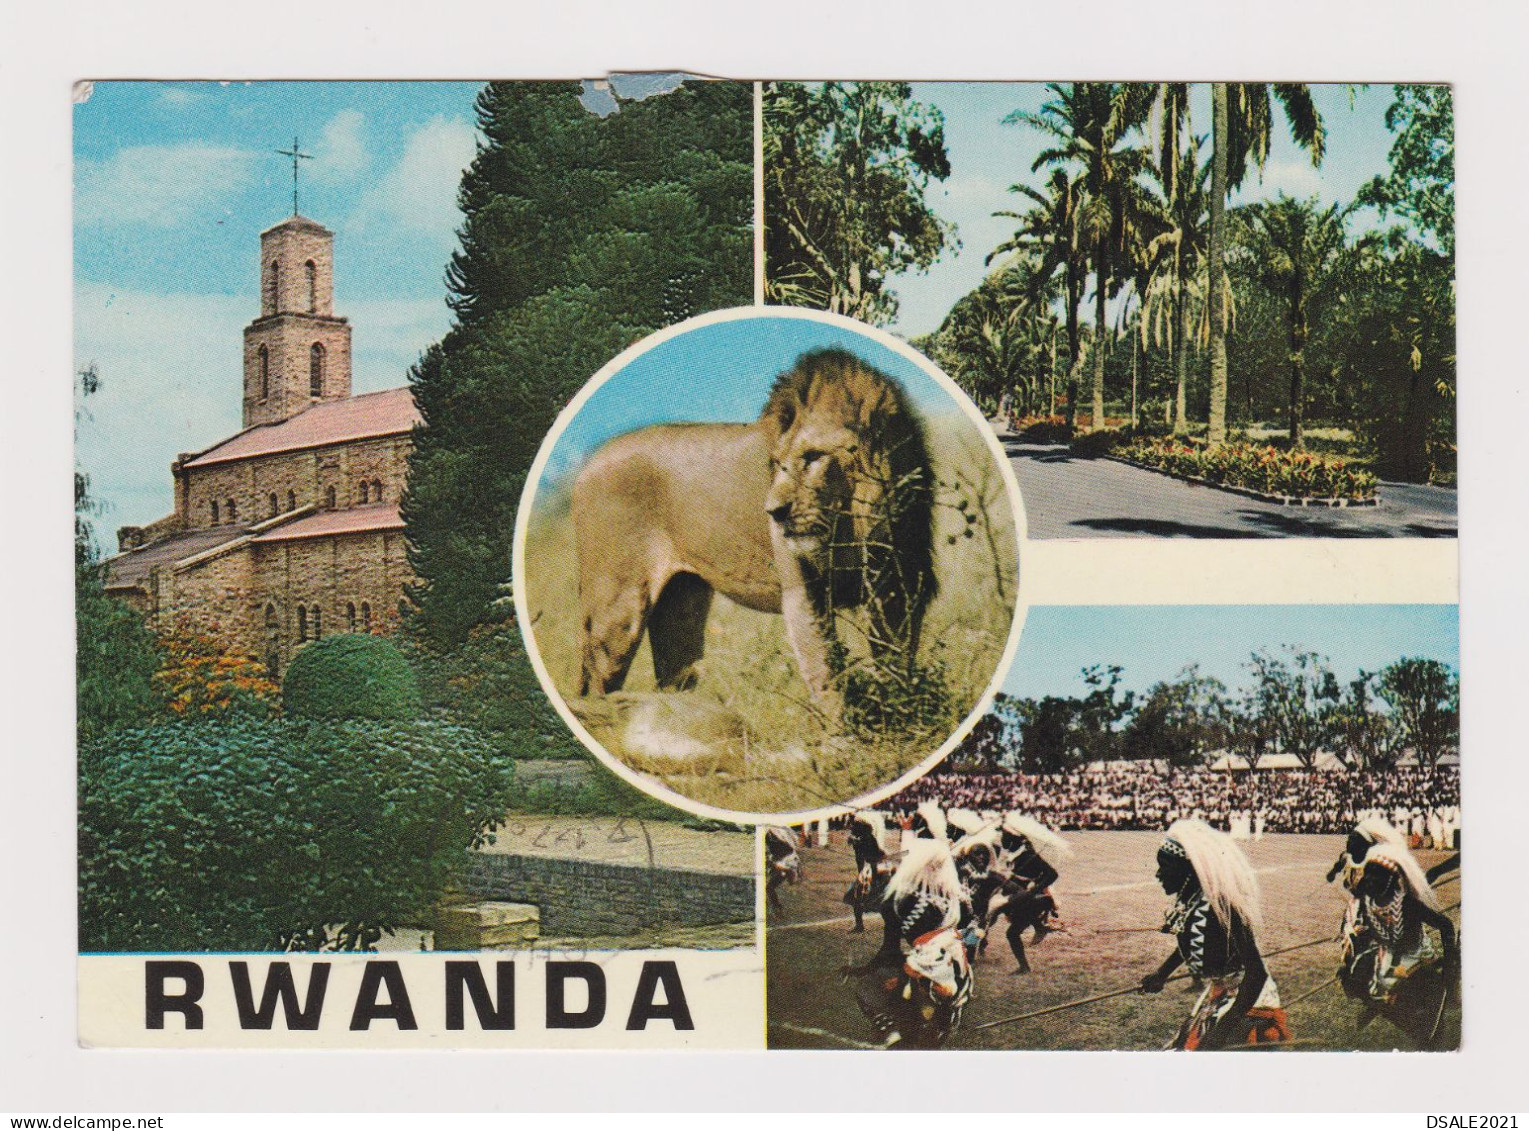 RWANDA Multiple Views Church, Native Dance, Photo Postcard With 18F Topic Stamp 1970s Sent Airmail To Bulgaria (67381) - Briefe U. Dokumente